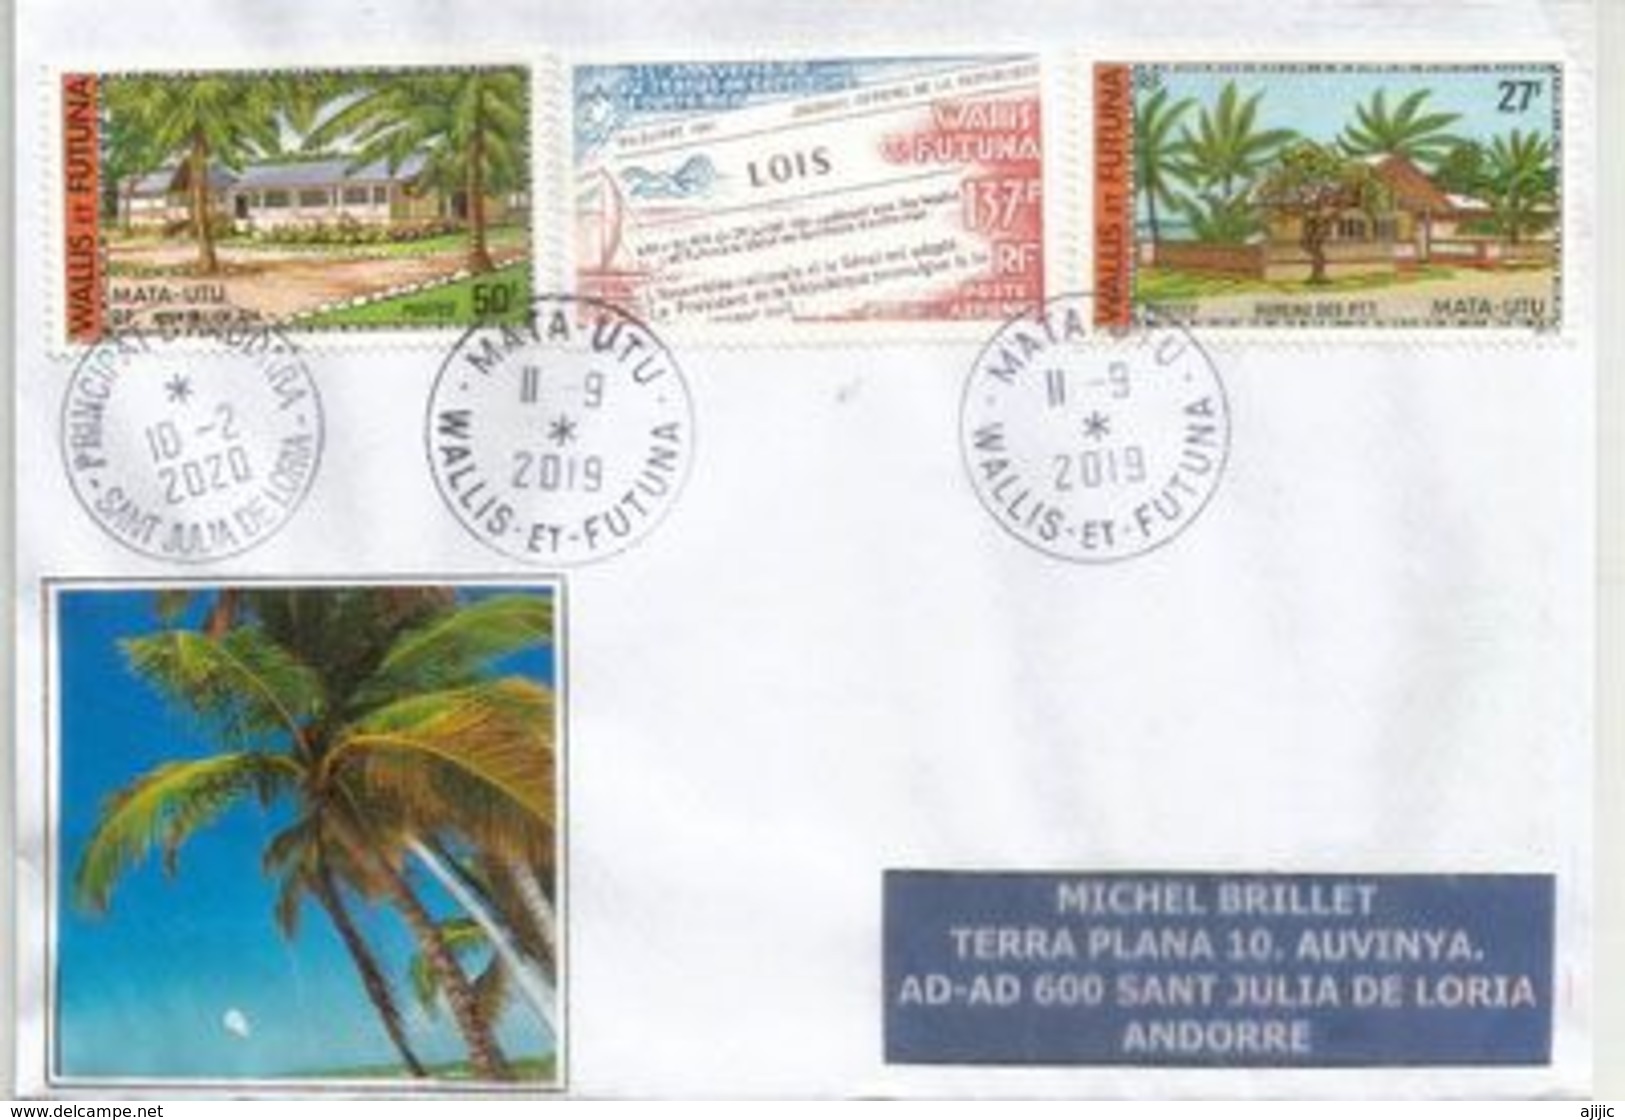 2019. Belle Lettre De Mata Utu (Wallis & Futuna) ., Adressée Andorra, Avec Timbre à Date Arrivée - Covers & Documents